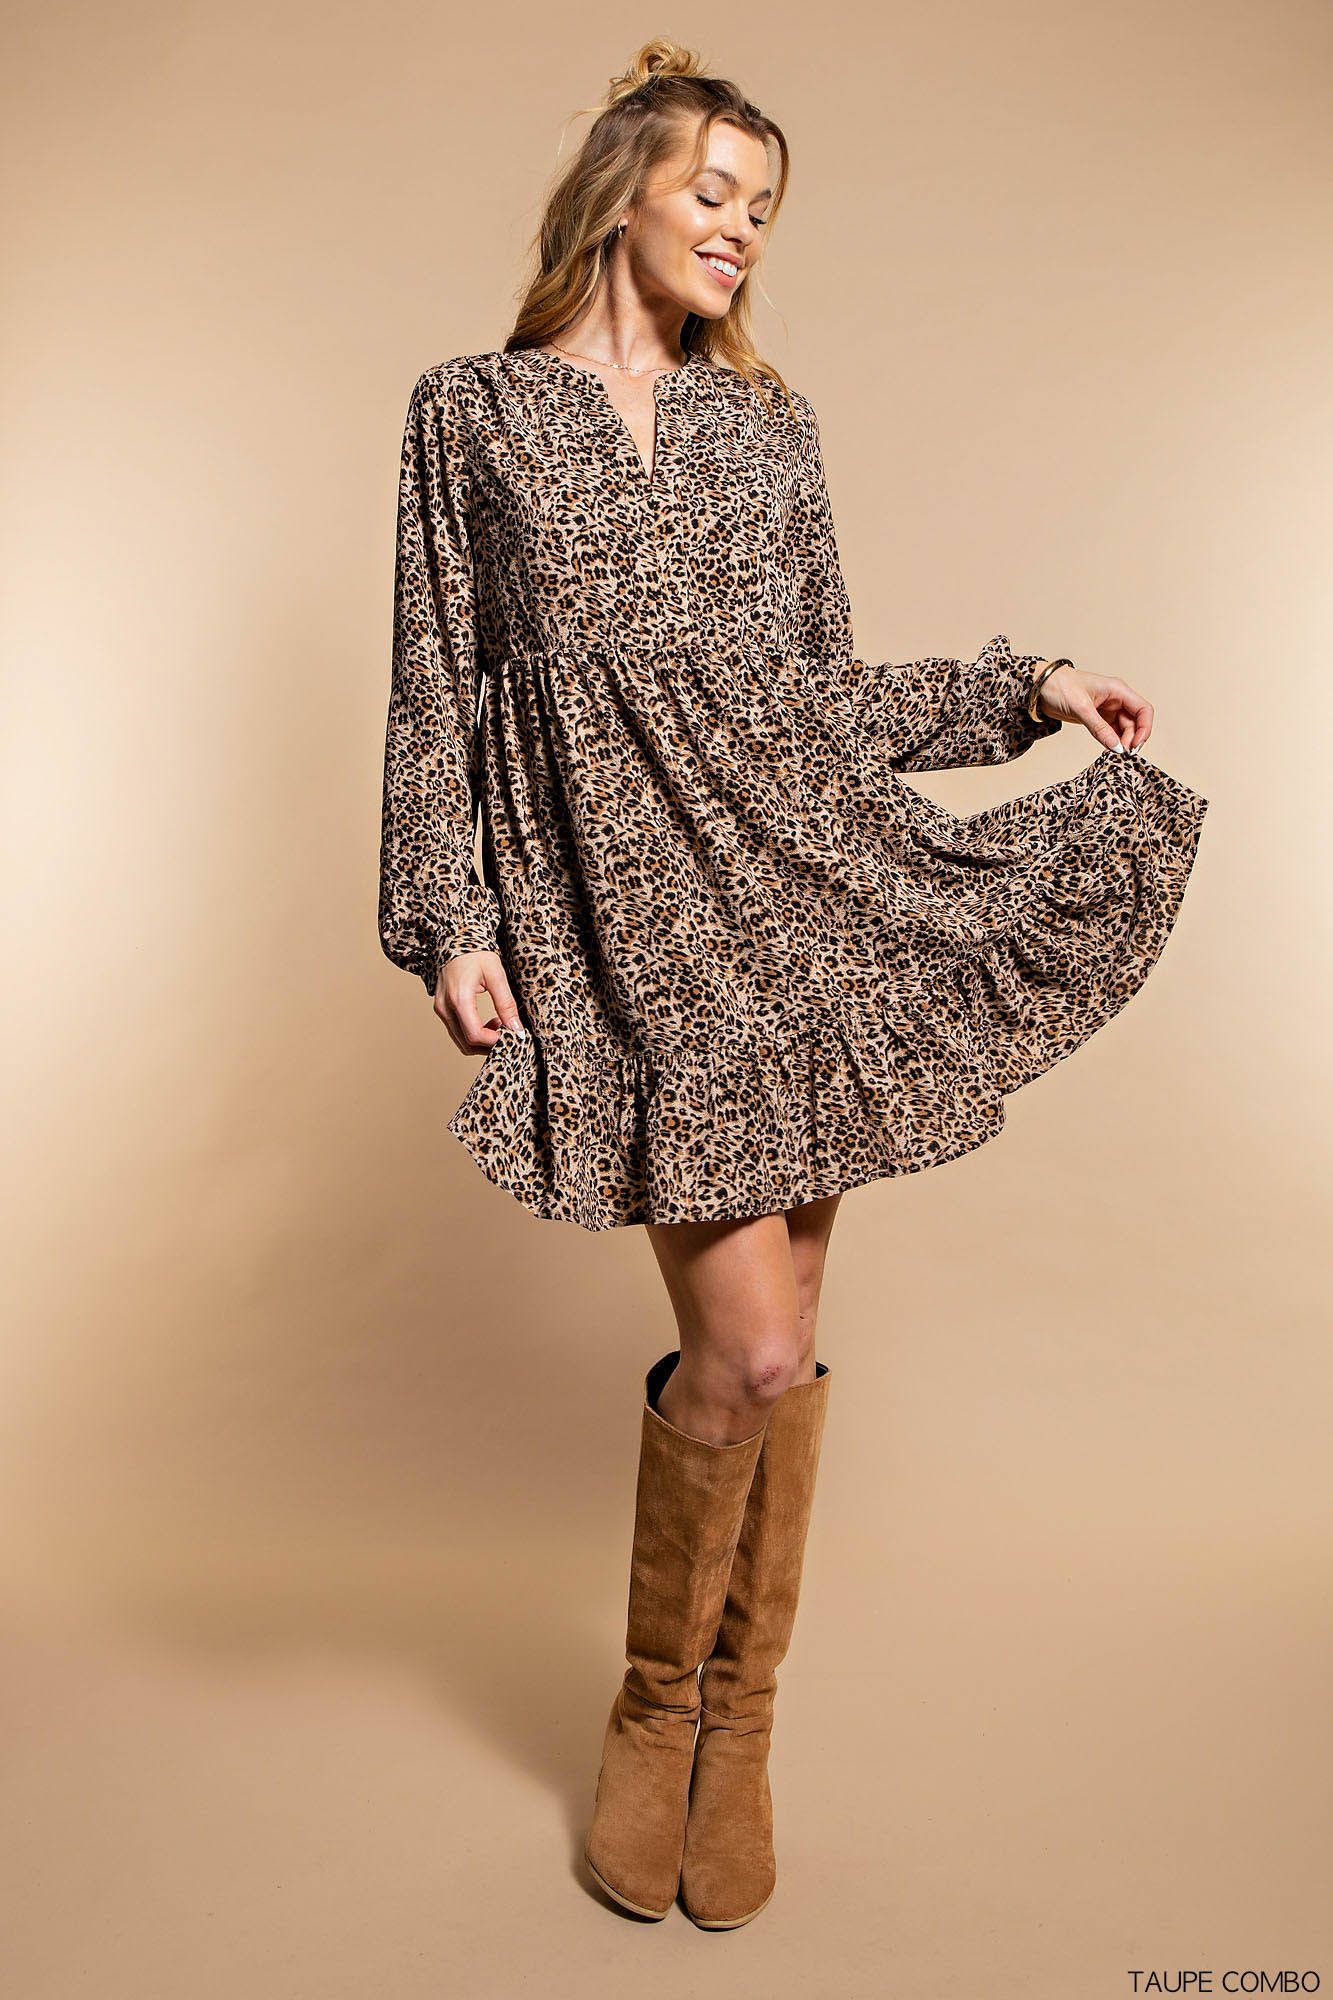 Leopard Print V-Neck Dress